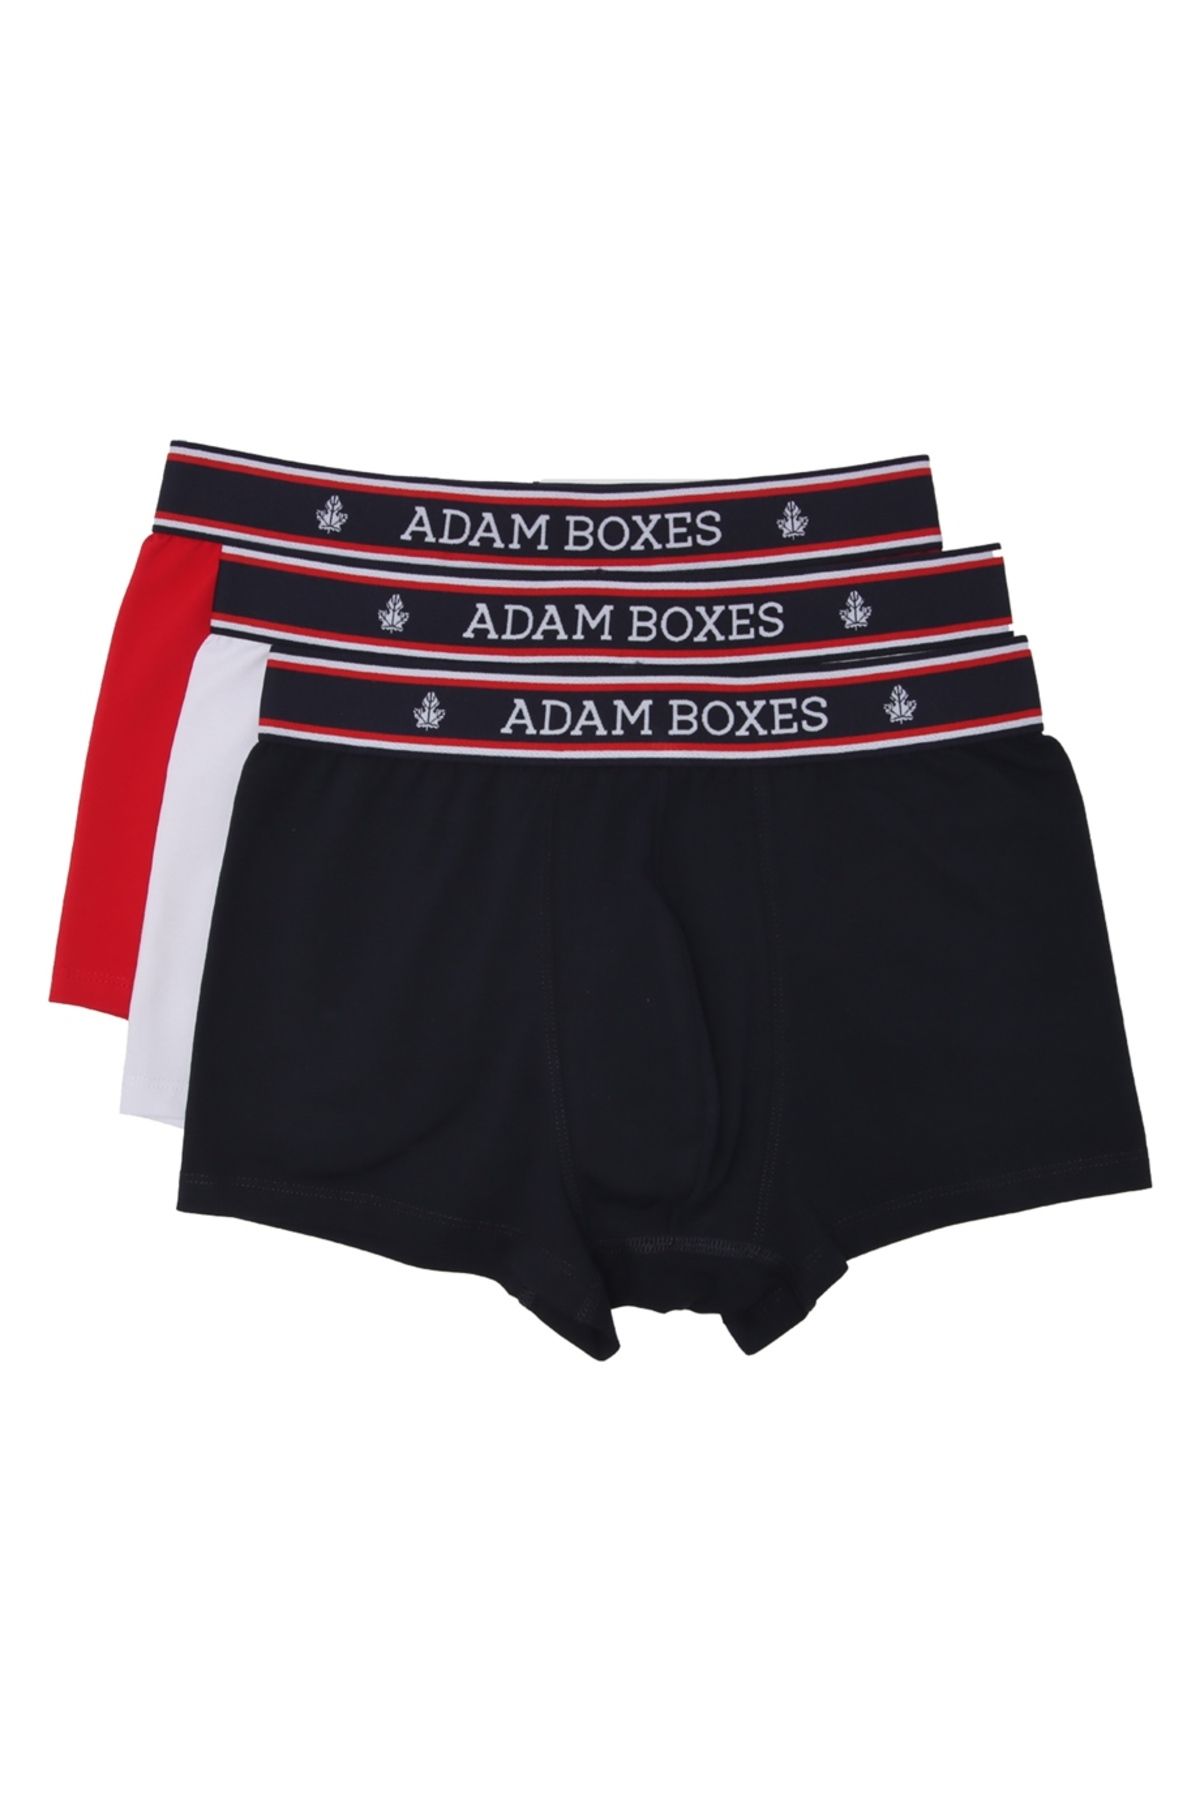 ADAM BOXES Boxer Trunk Neo-maritime 3'lü Paket - Lacivert, Beyaz, Kırmızı